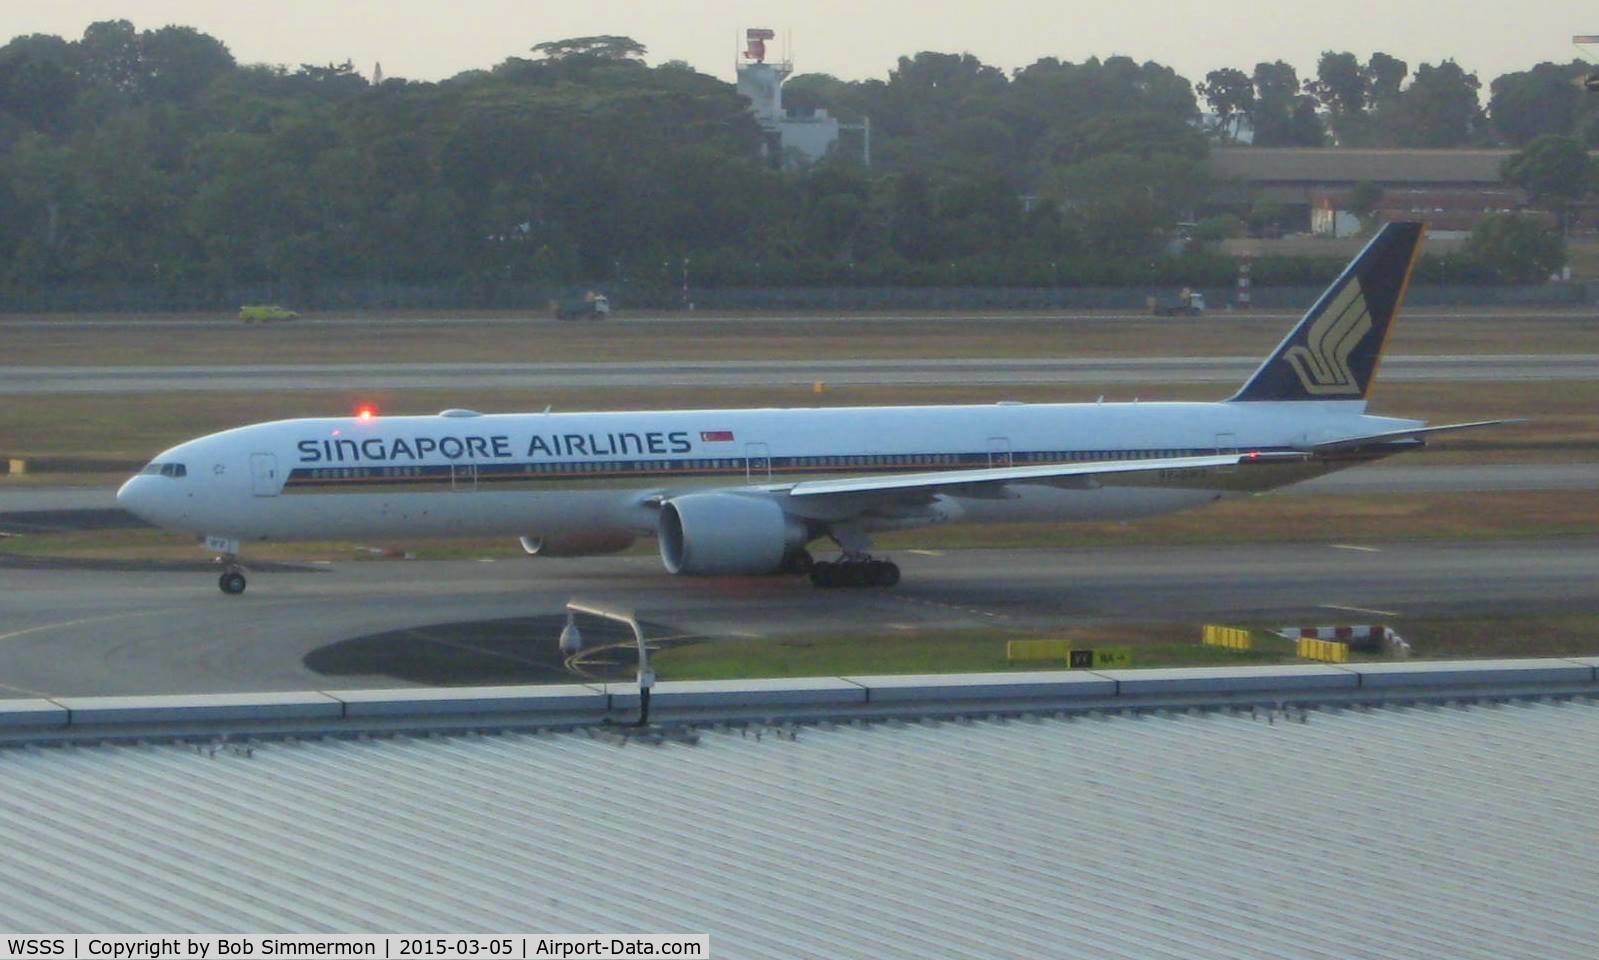 Singapore Changi Airport, Changi Singapore (WSSS) - Singapore Airlines B777 arriving at Changi Airport